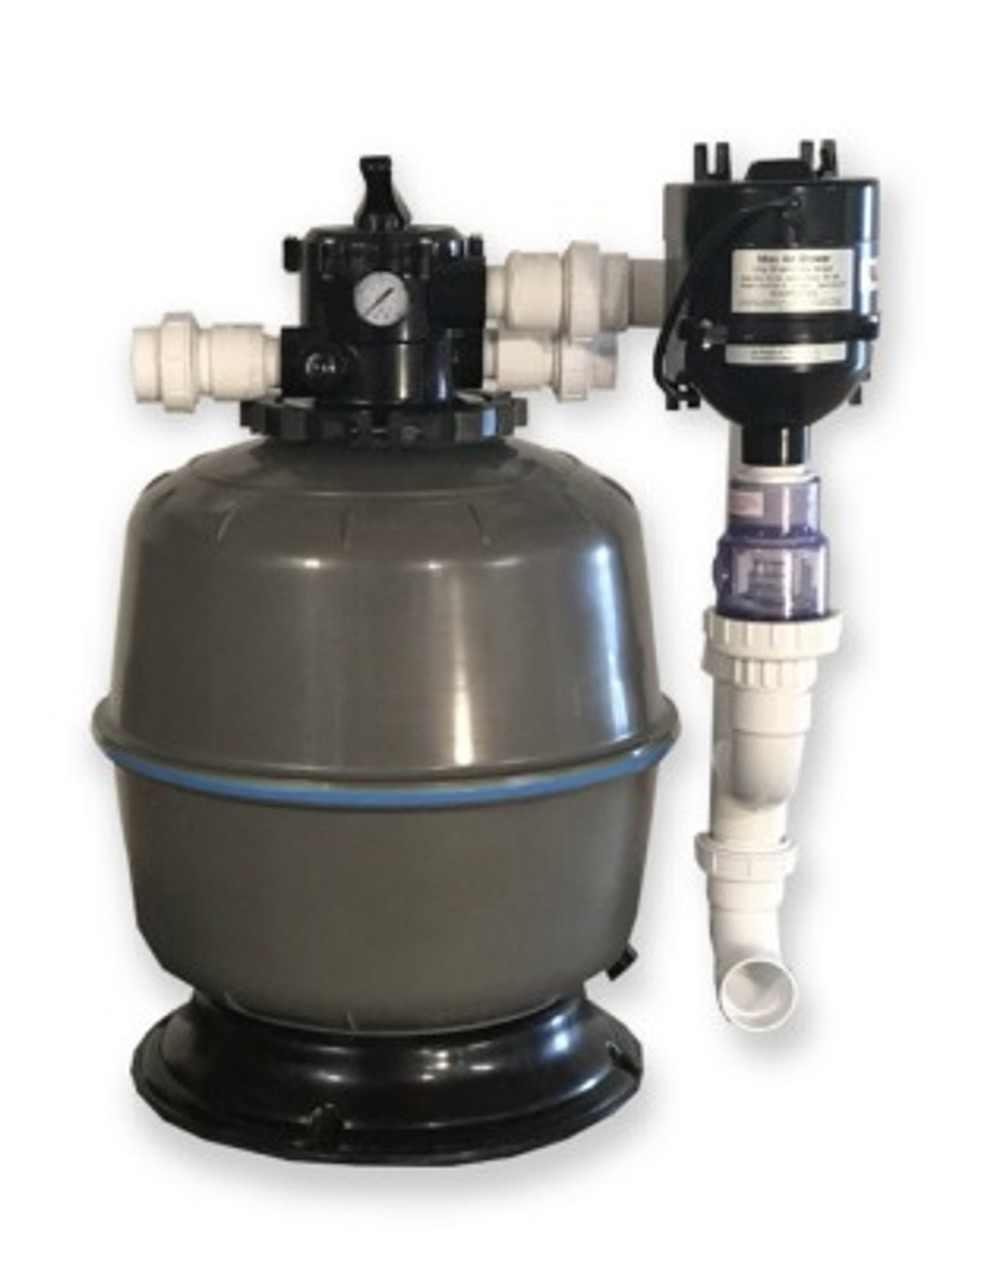 GC Tek PondKeeper 4.0 Filter - up to 10000 gallons